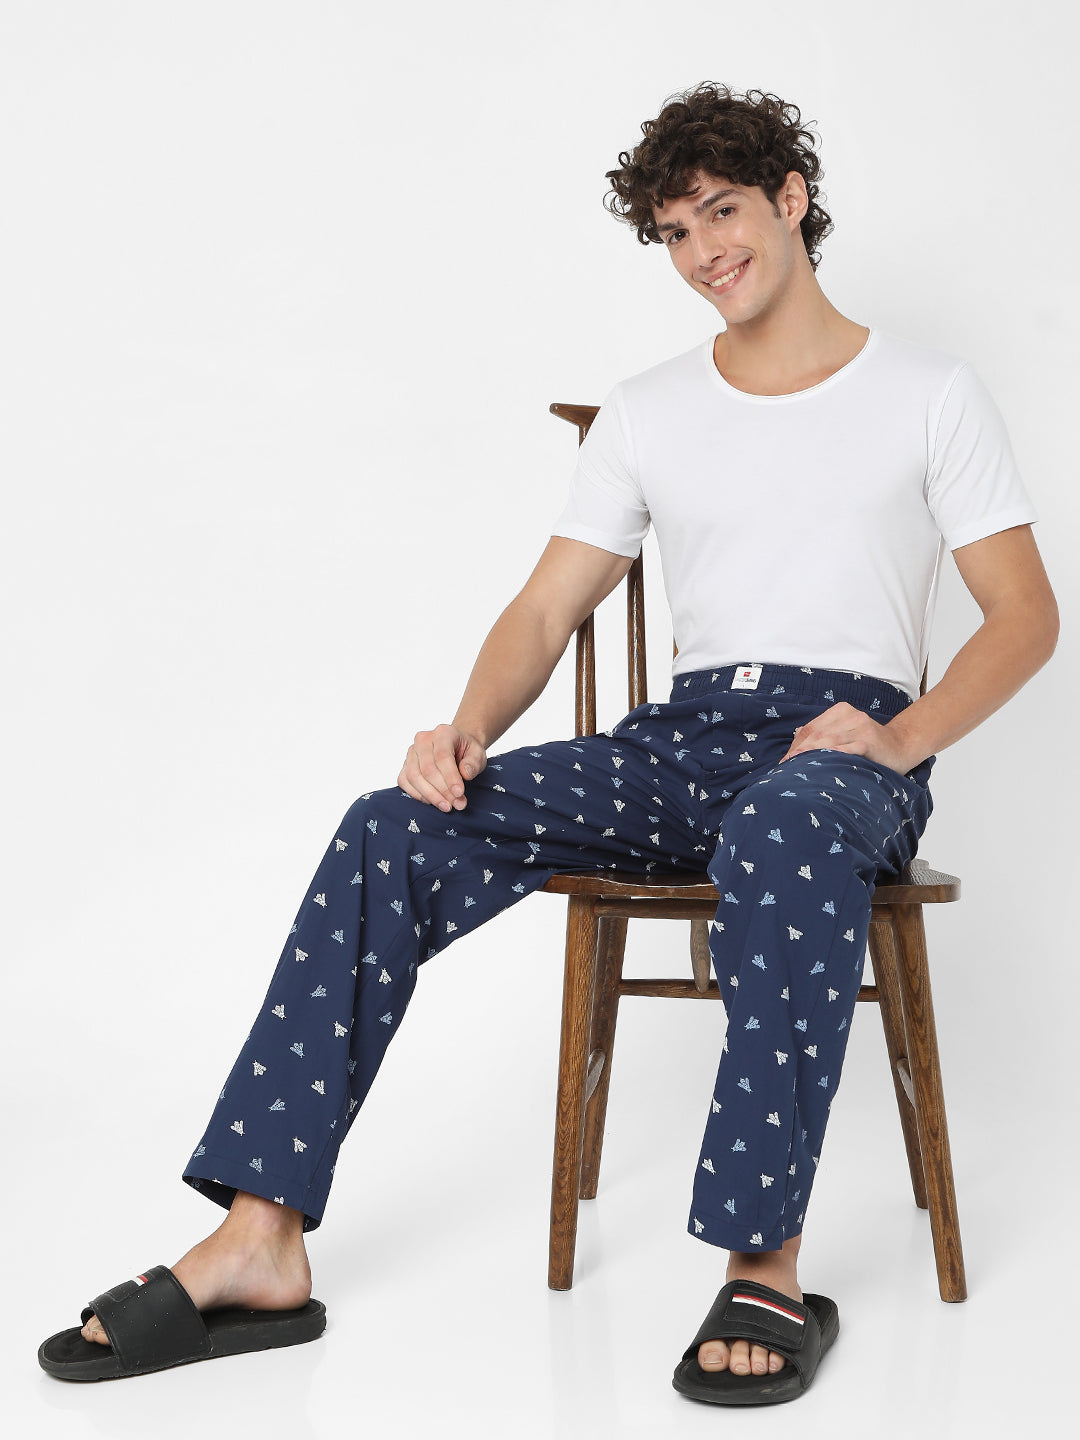 Pyjamas & Underwear, Men's Clothing